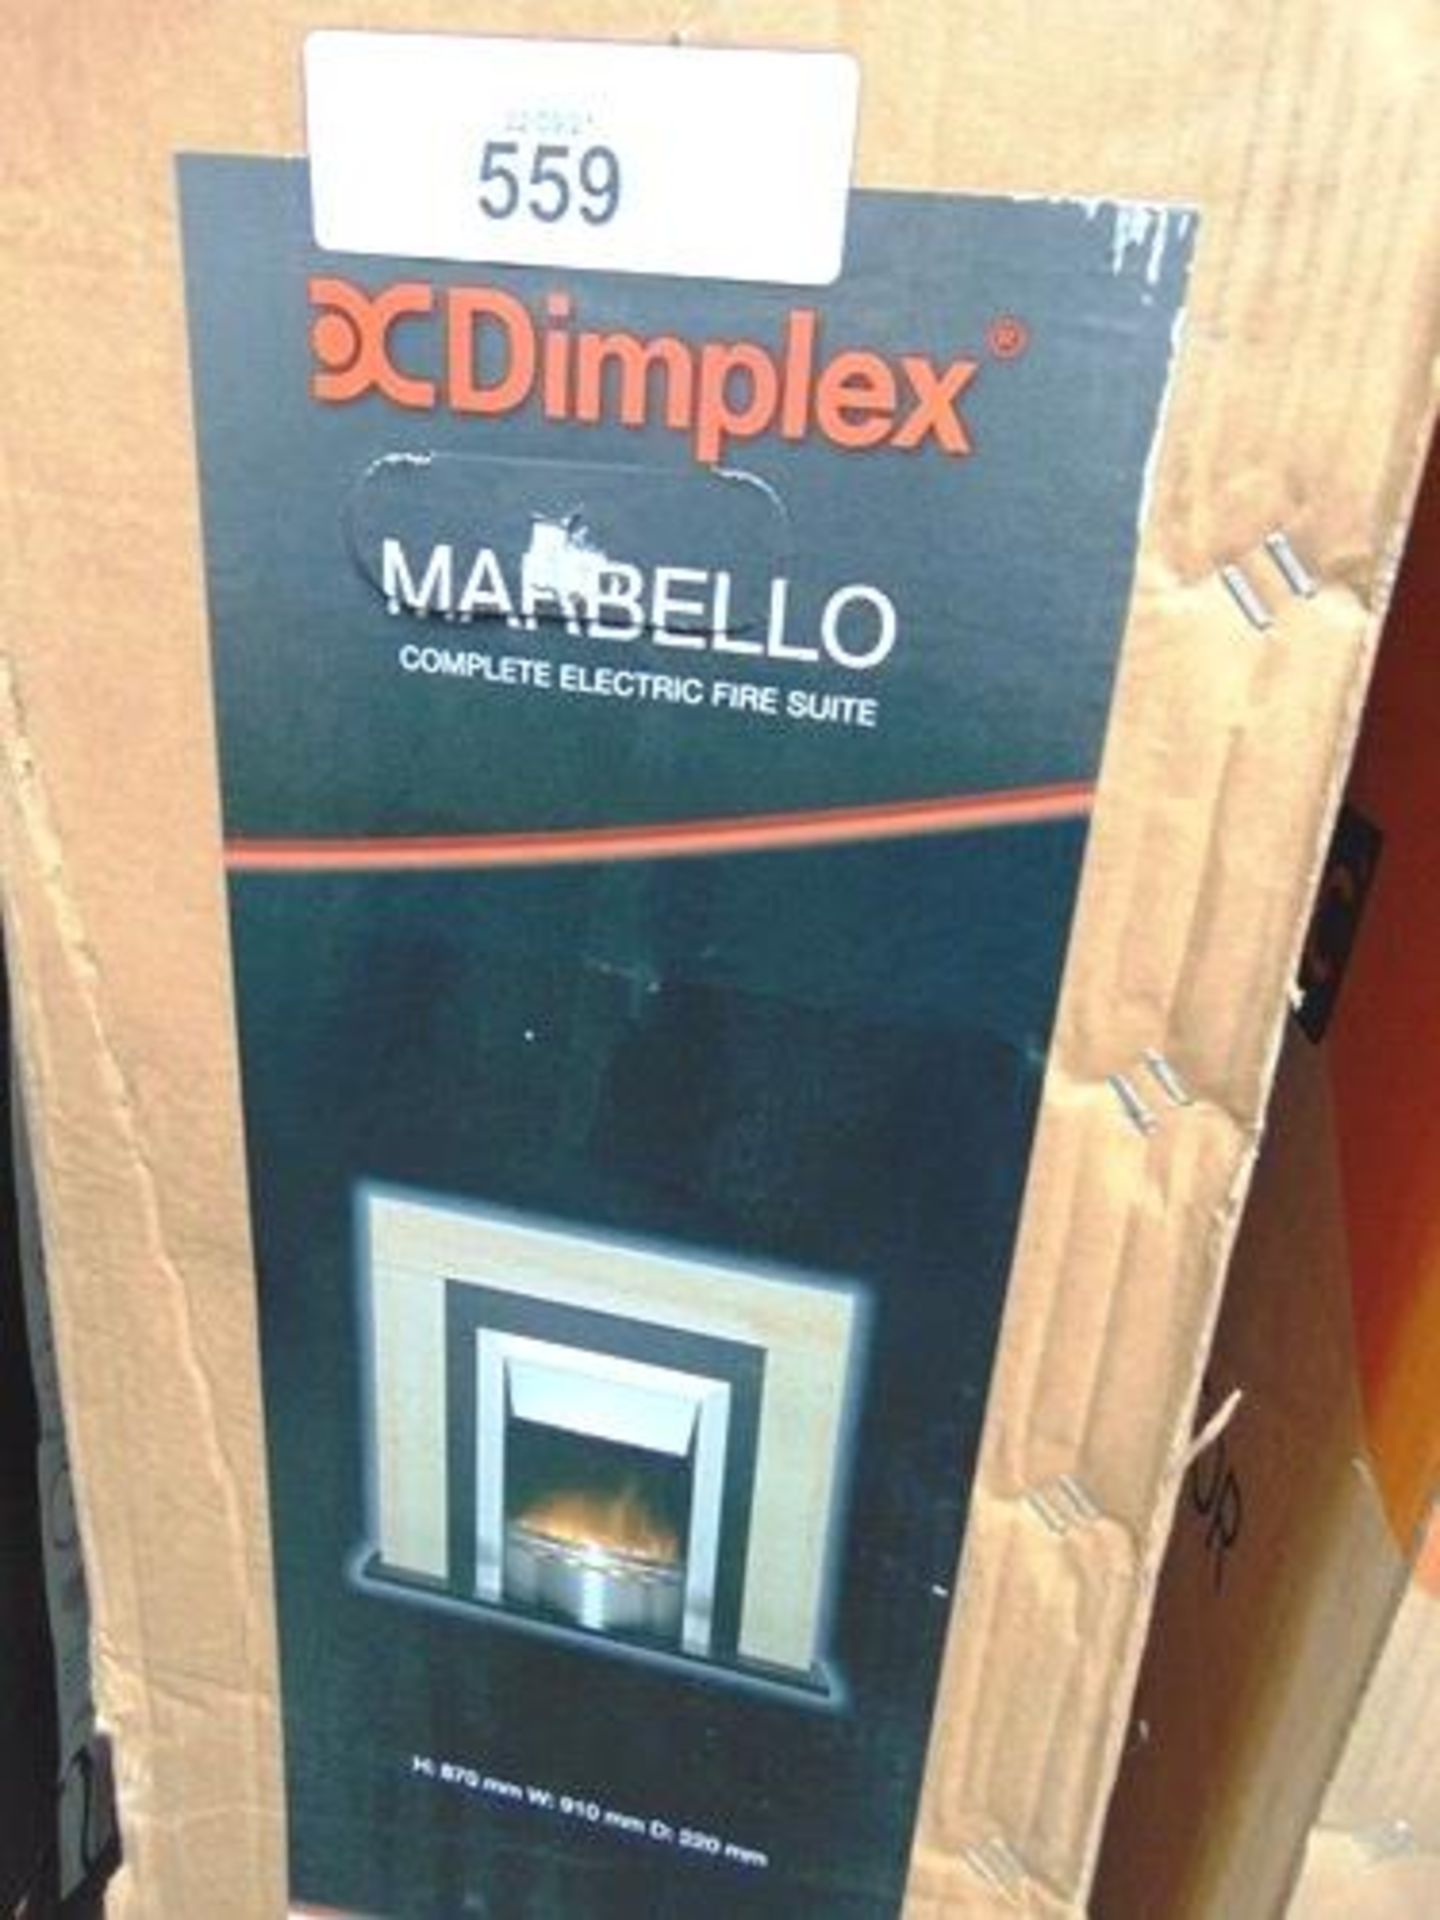 1 x Dimplex Marbello complete electric fire, model MBL20 - New in box (ES8)